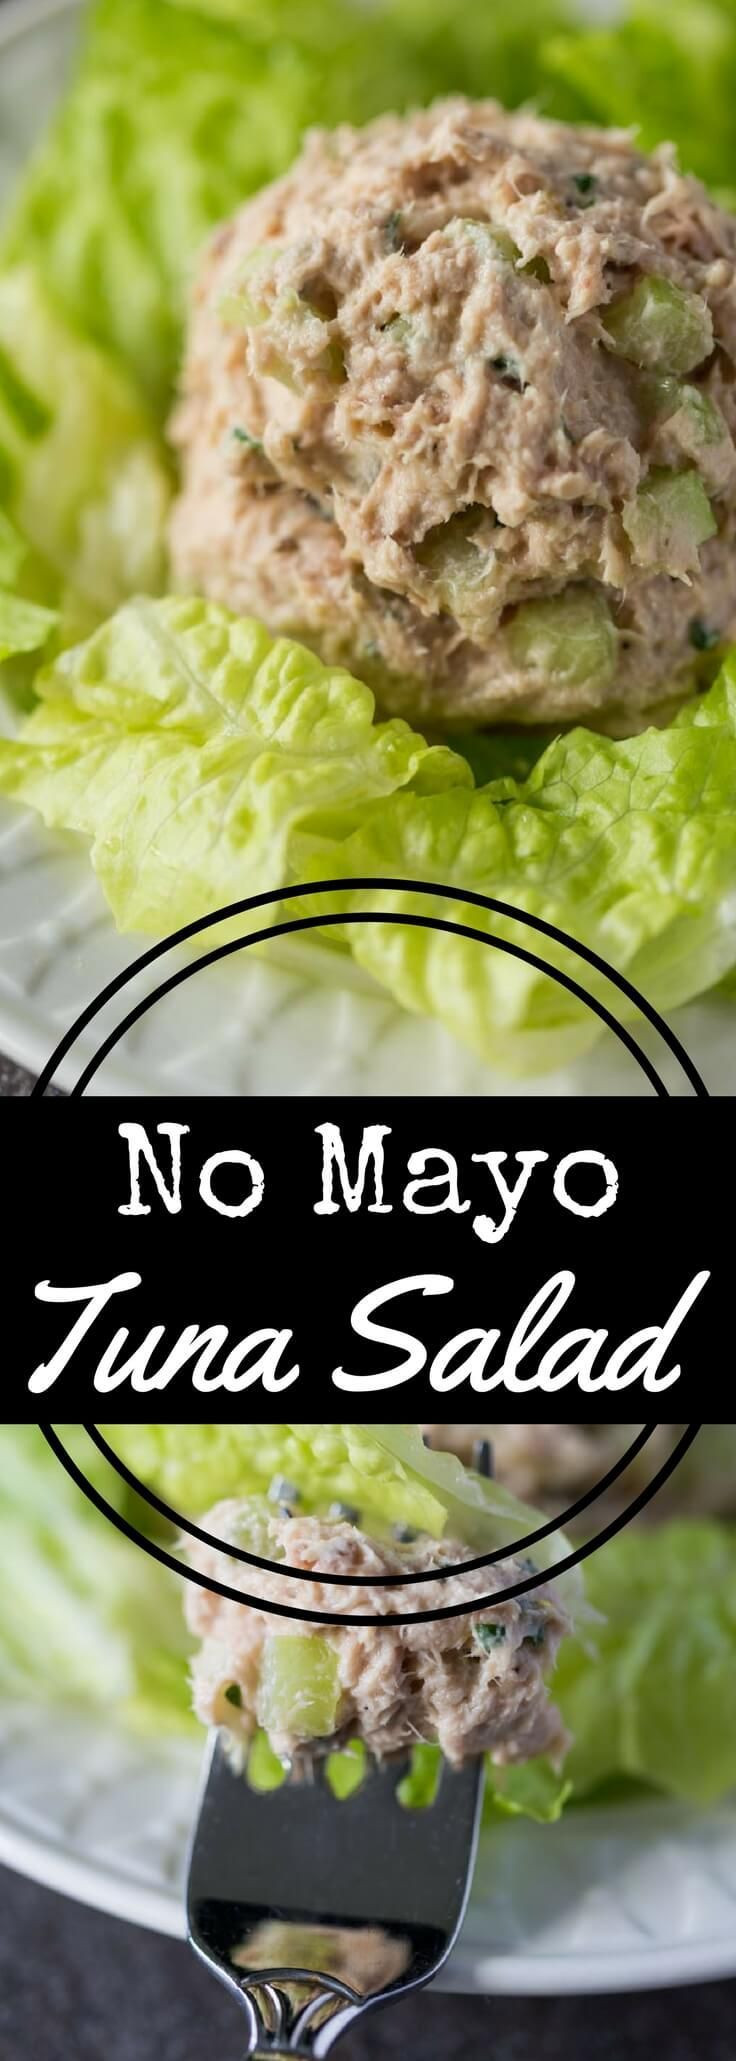 Tuna Fish Recipes Without Mayonnaise
 No Mayo Tuna Salad Recipe